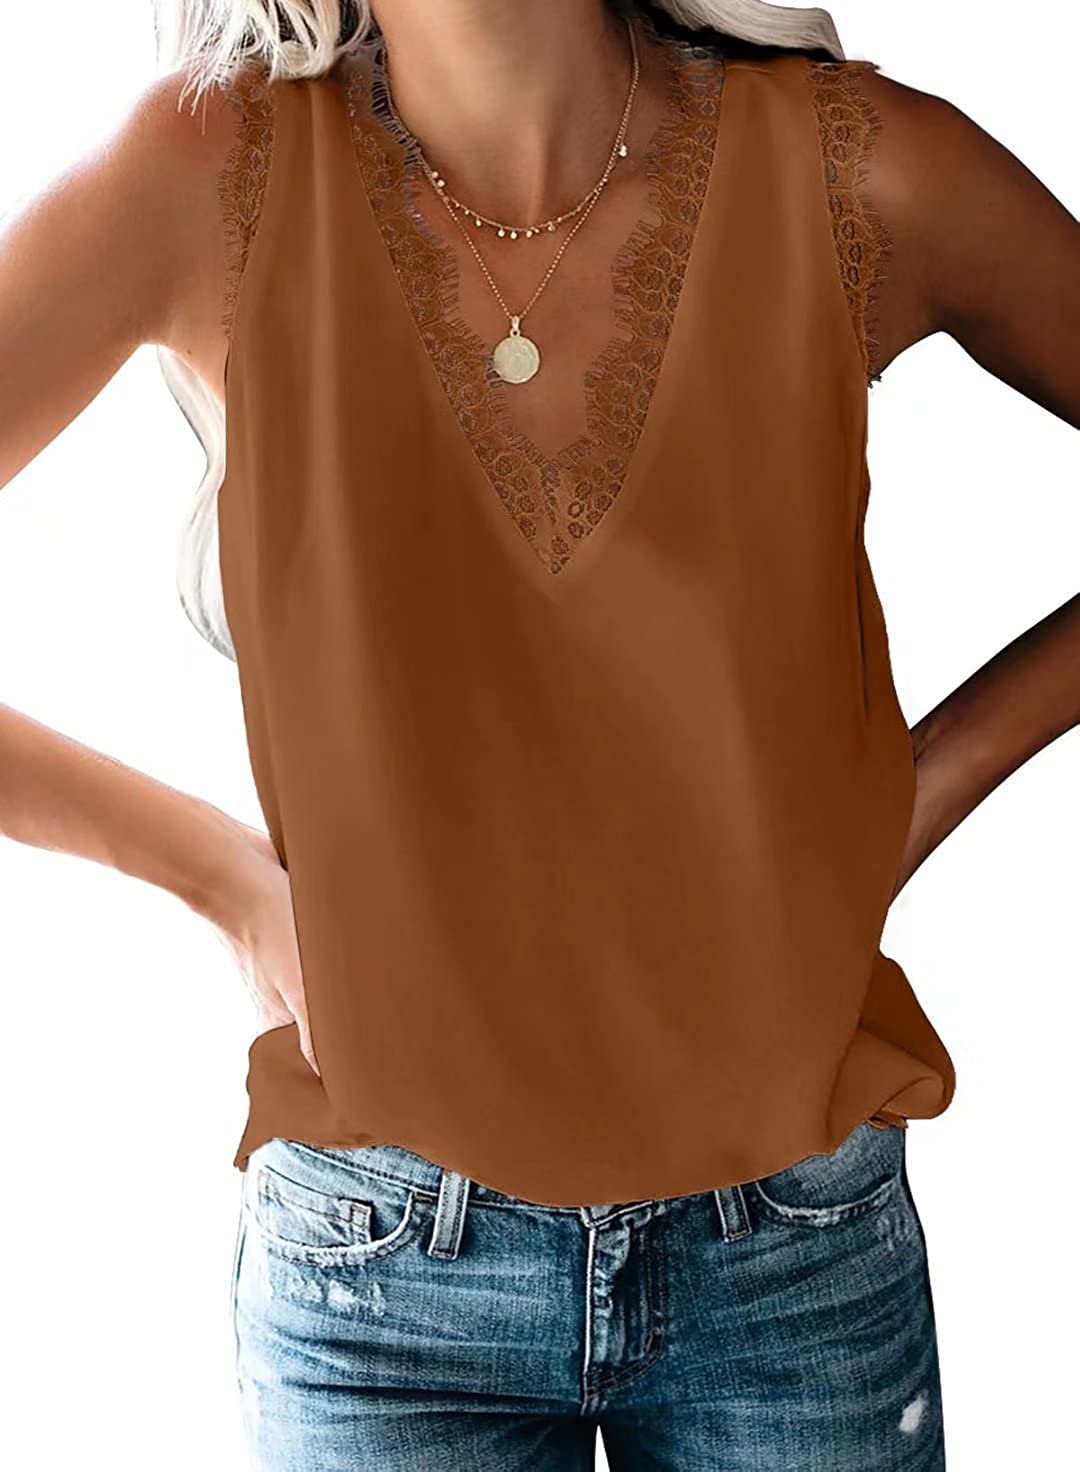 BLENCOT Women Lace Trim Tank Tops V Neck Fashion Casual Sleeveless Blouse  Vest Shirts